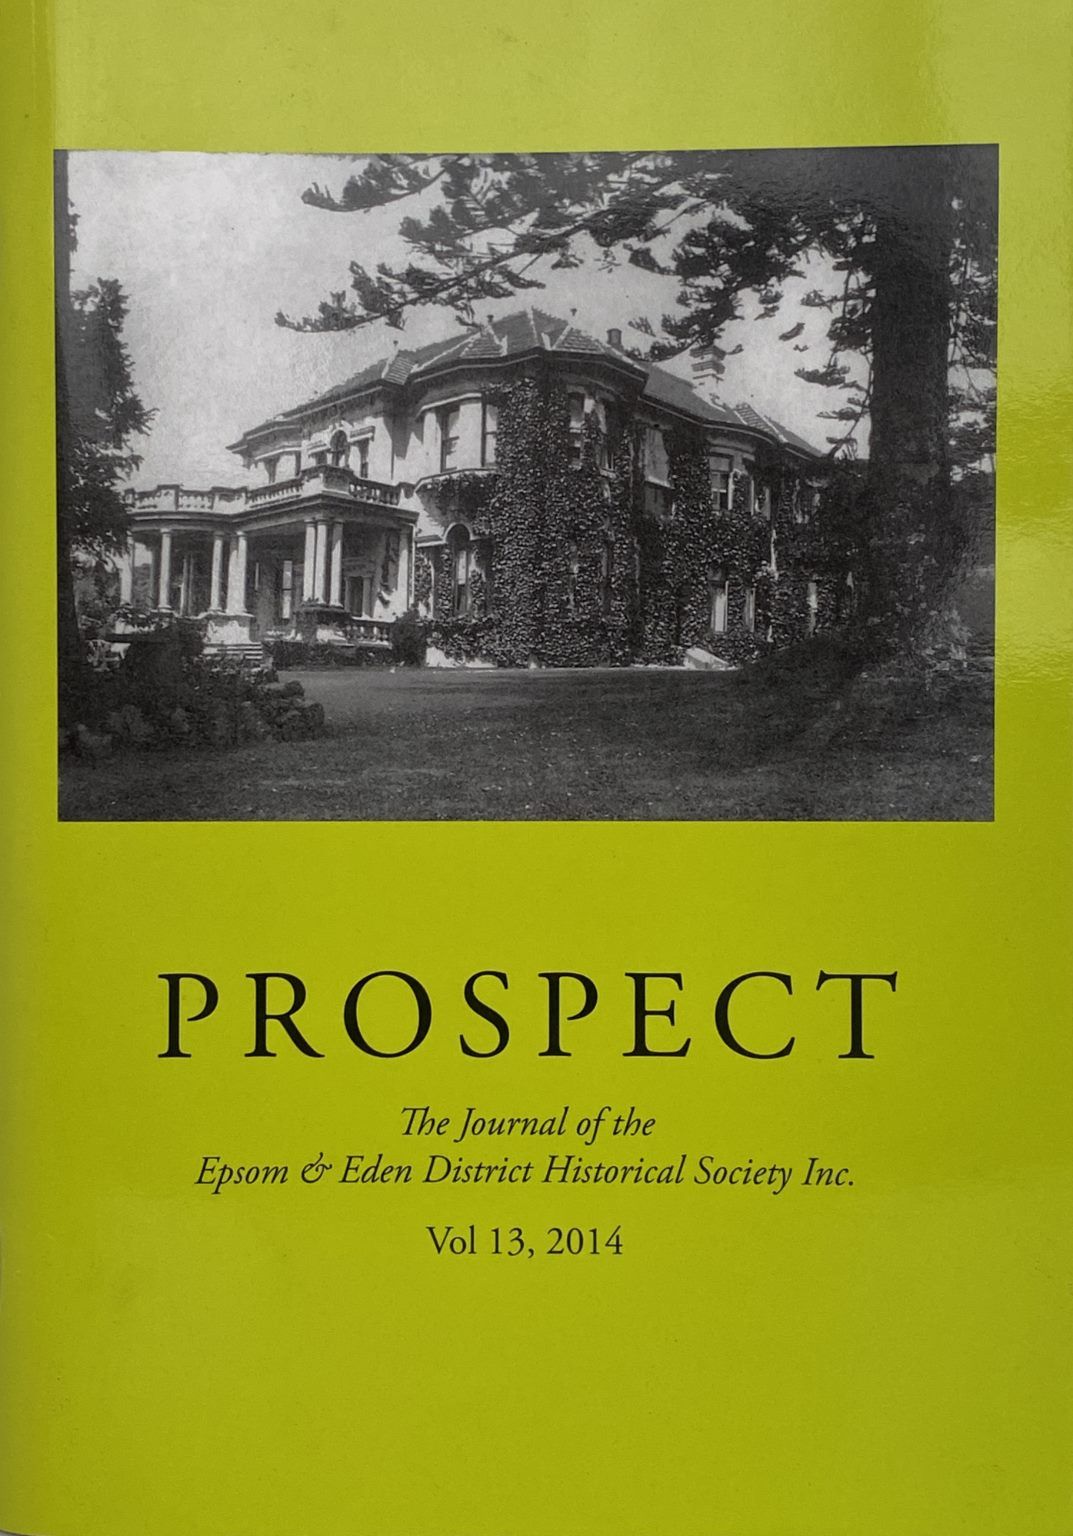 PROSPECT: Journal of the Epsom & Eden District Historical Society - Vol 13, 2014